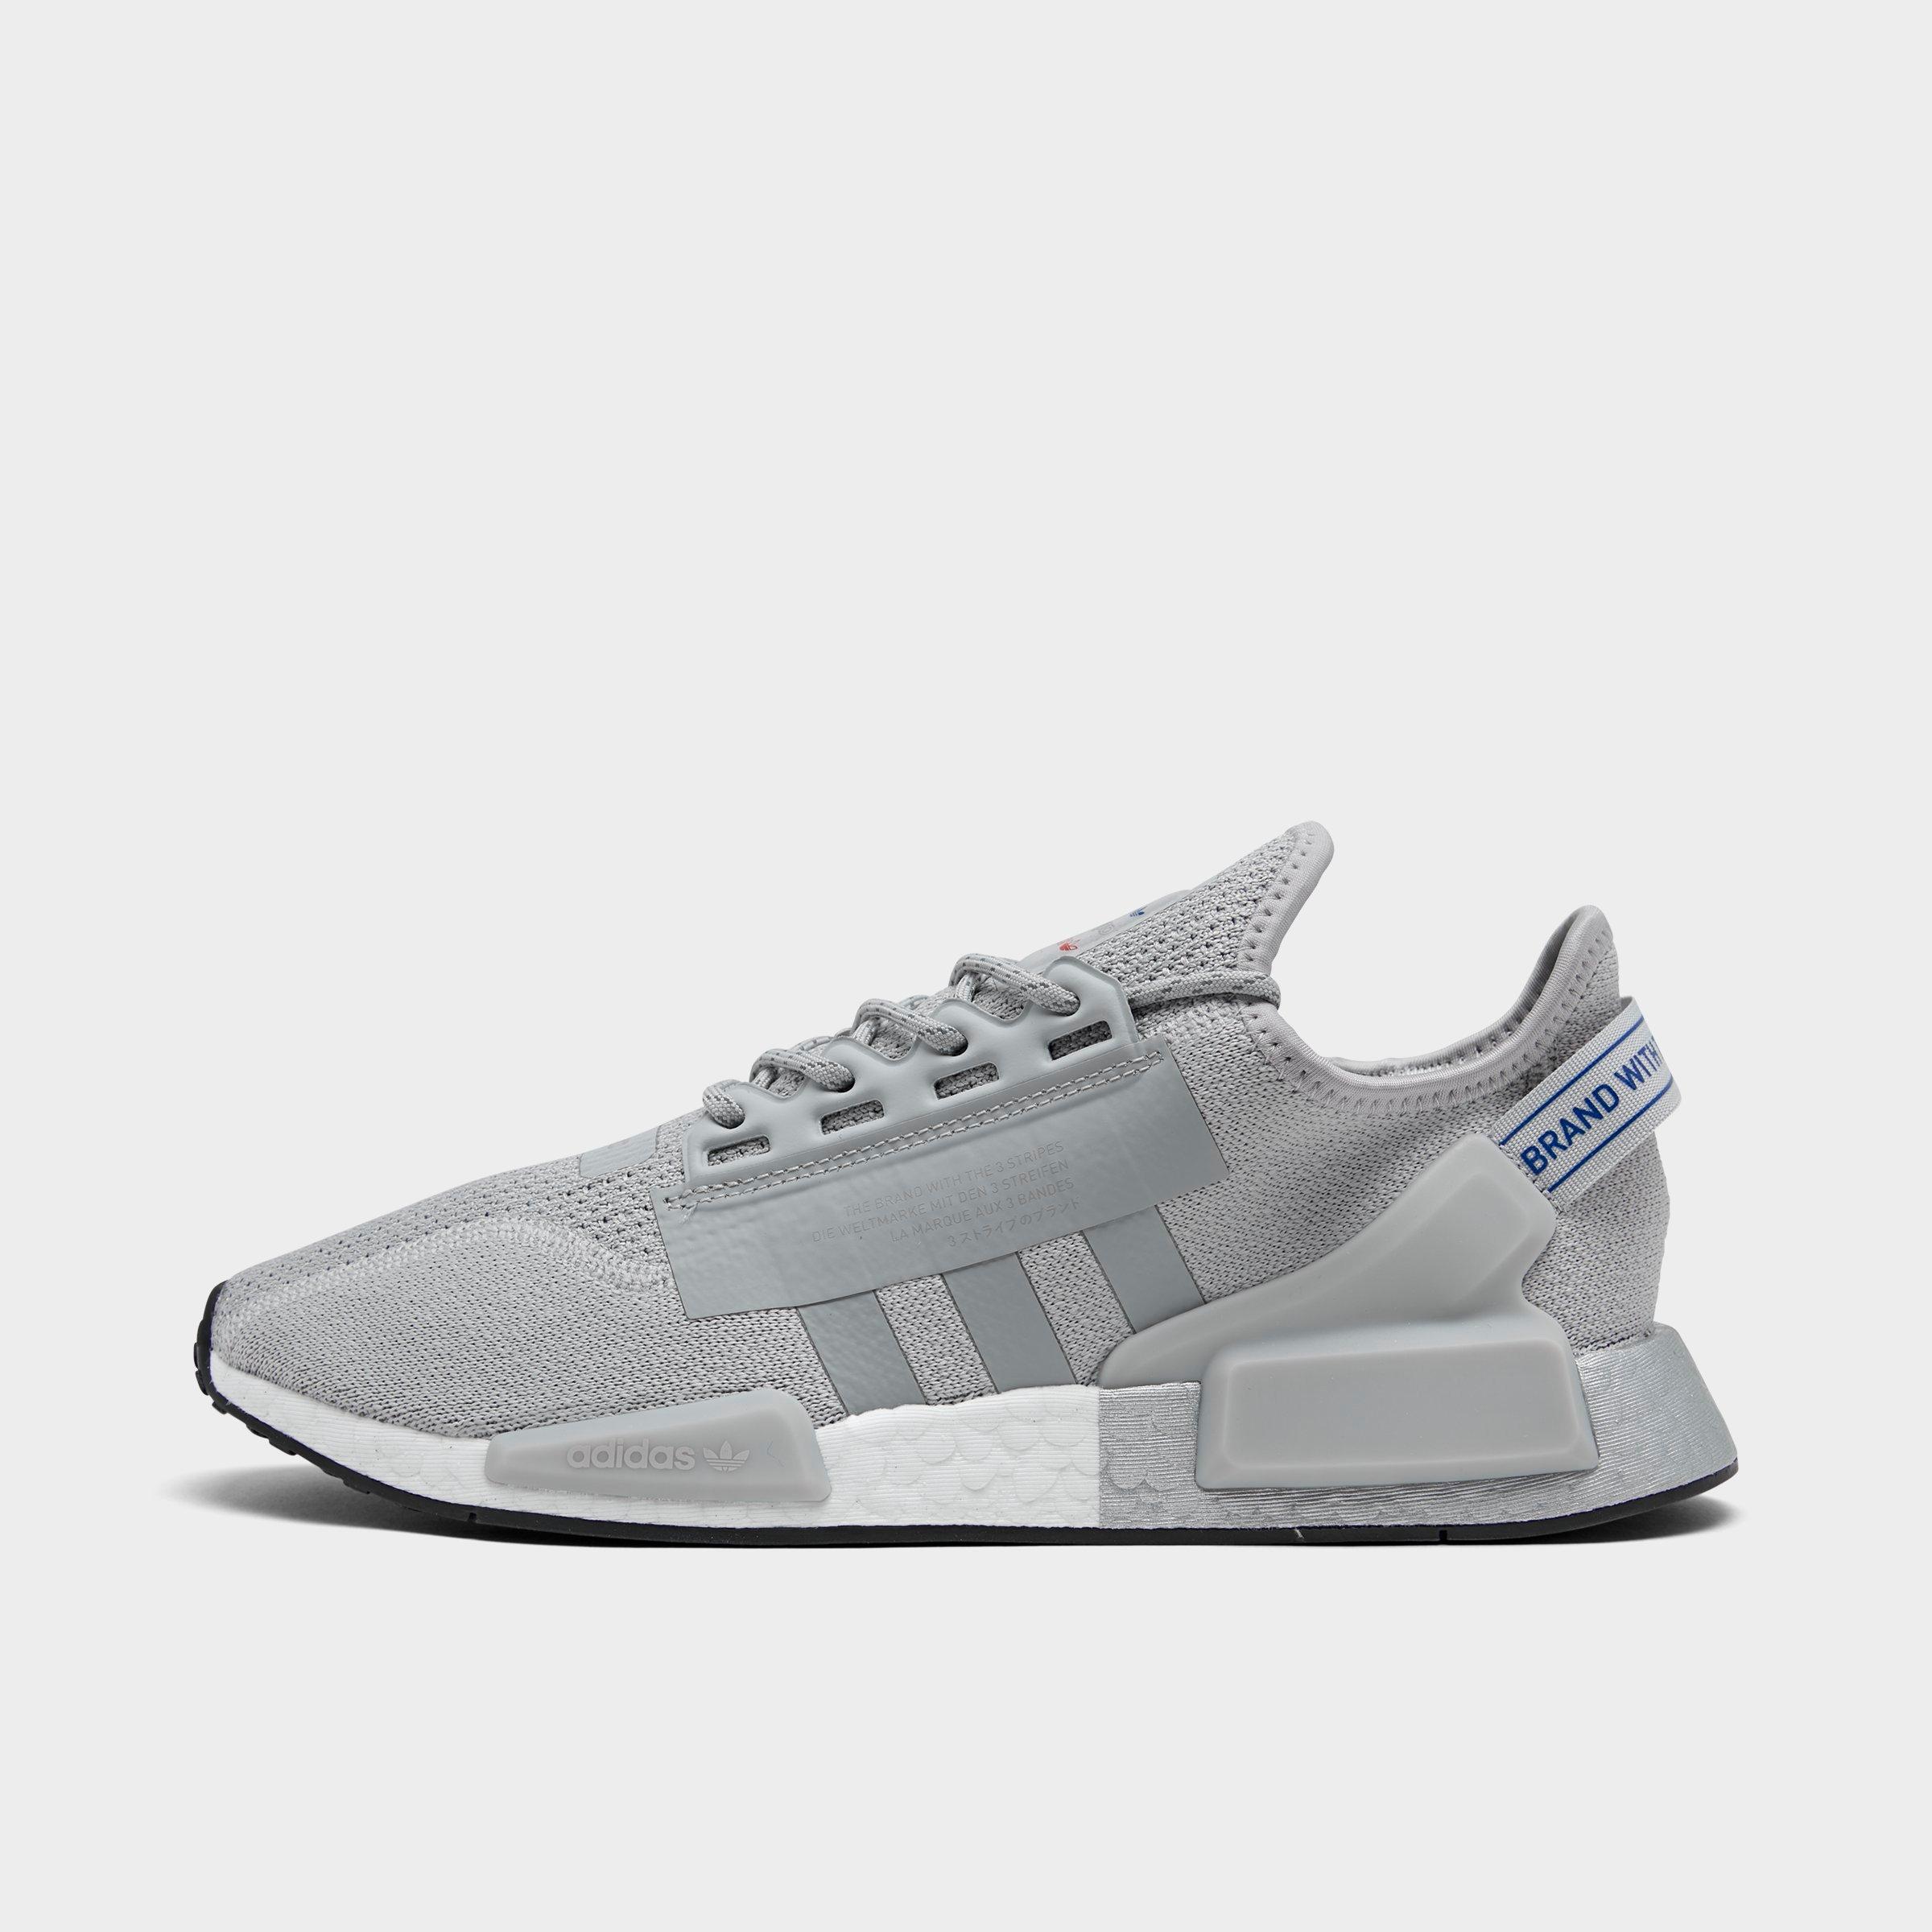 Adidas shoes nmd r1 blue gray poshmark